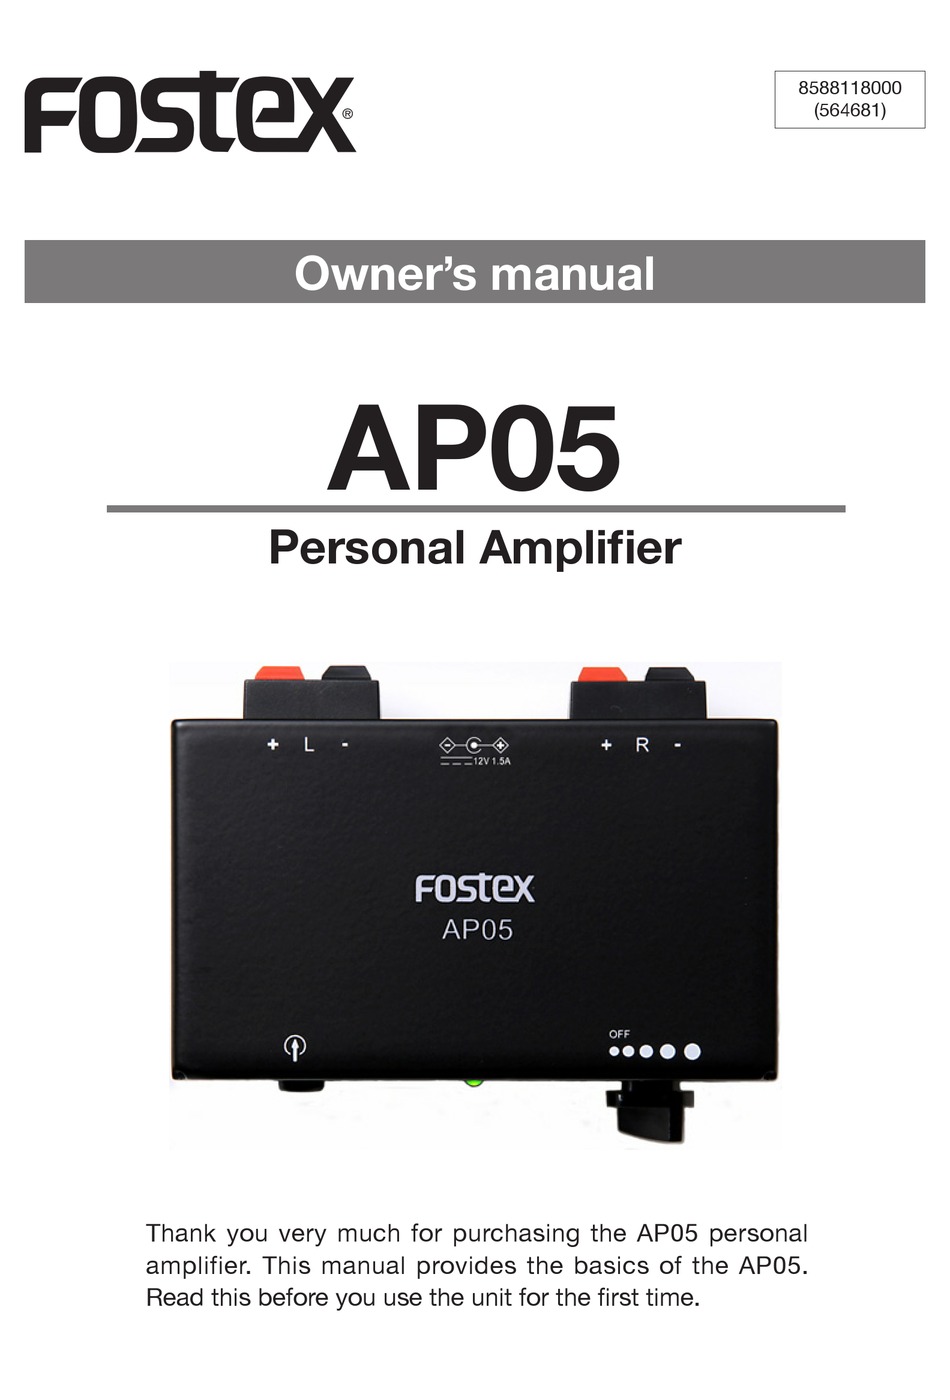 FOSTEX AP05 OWNER'S MANUAL Pdf Download | ManualsLib